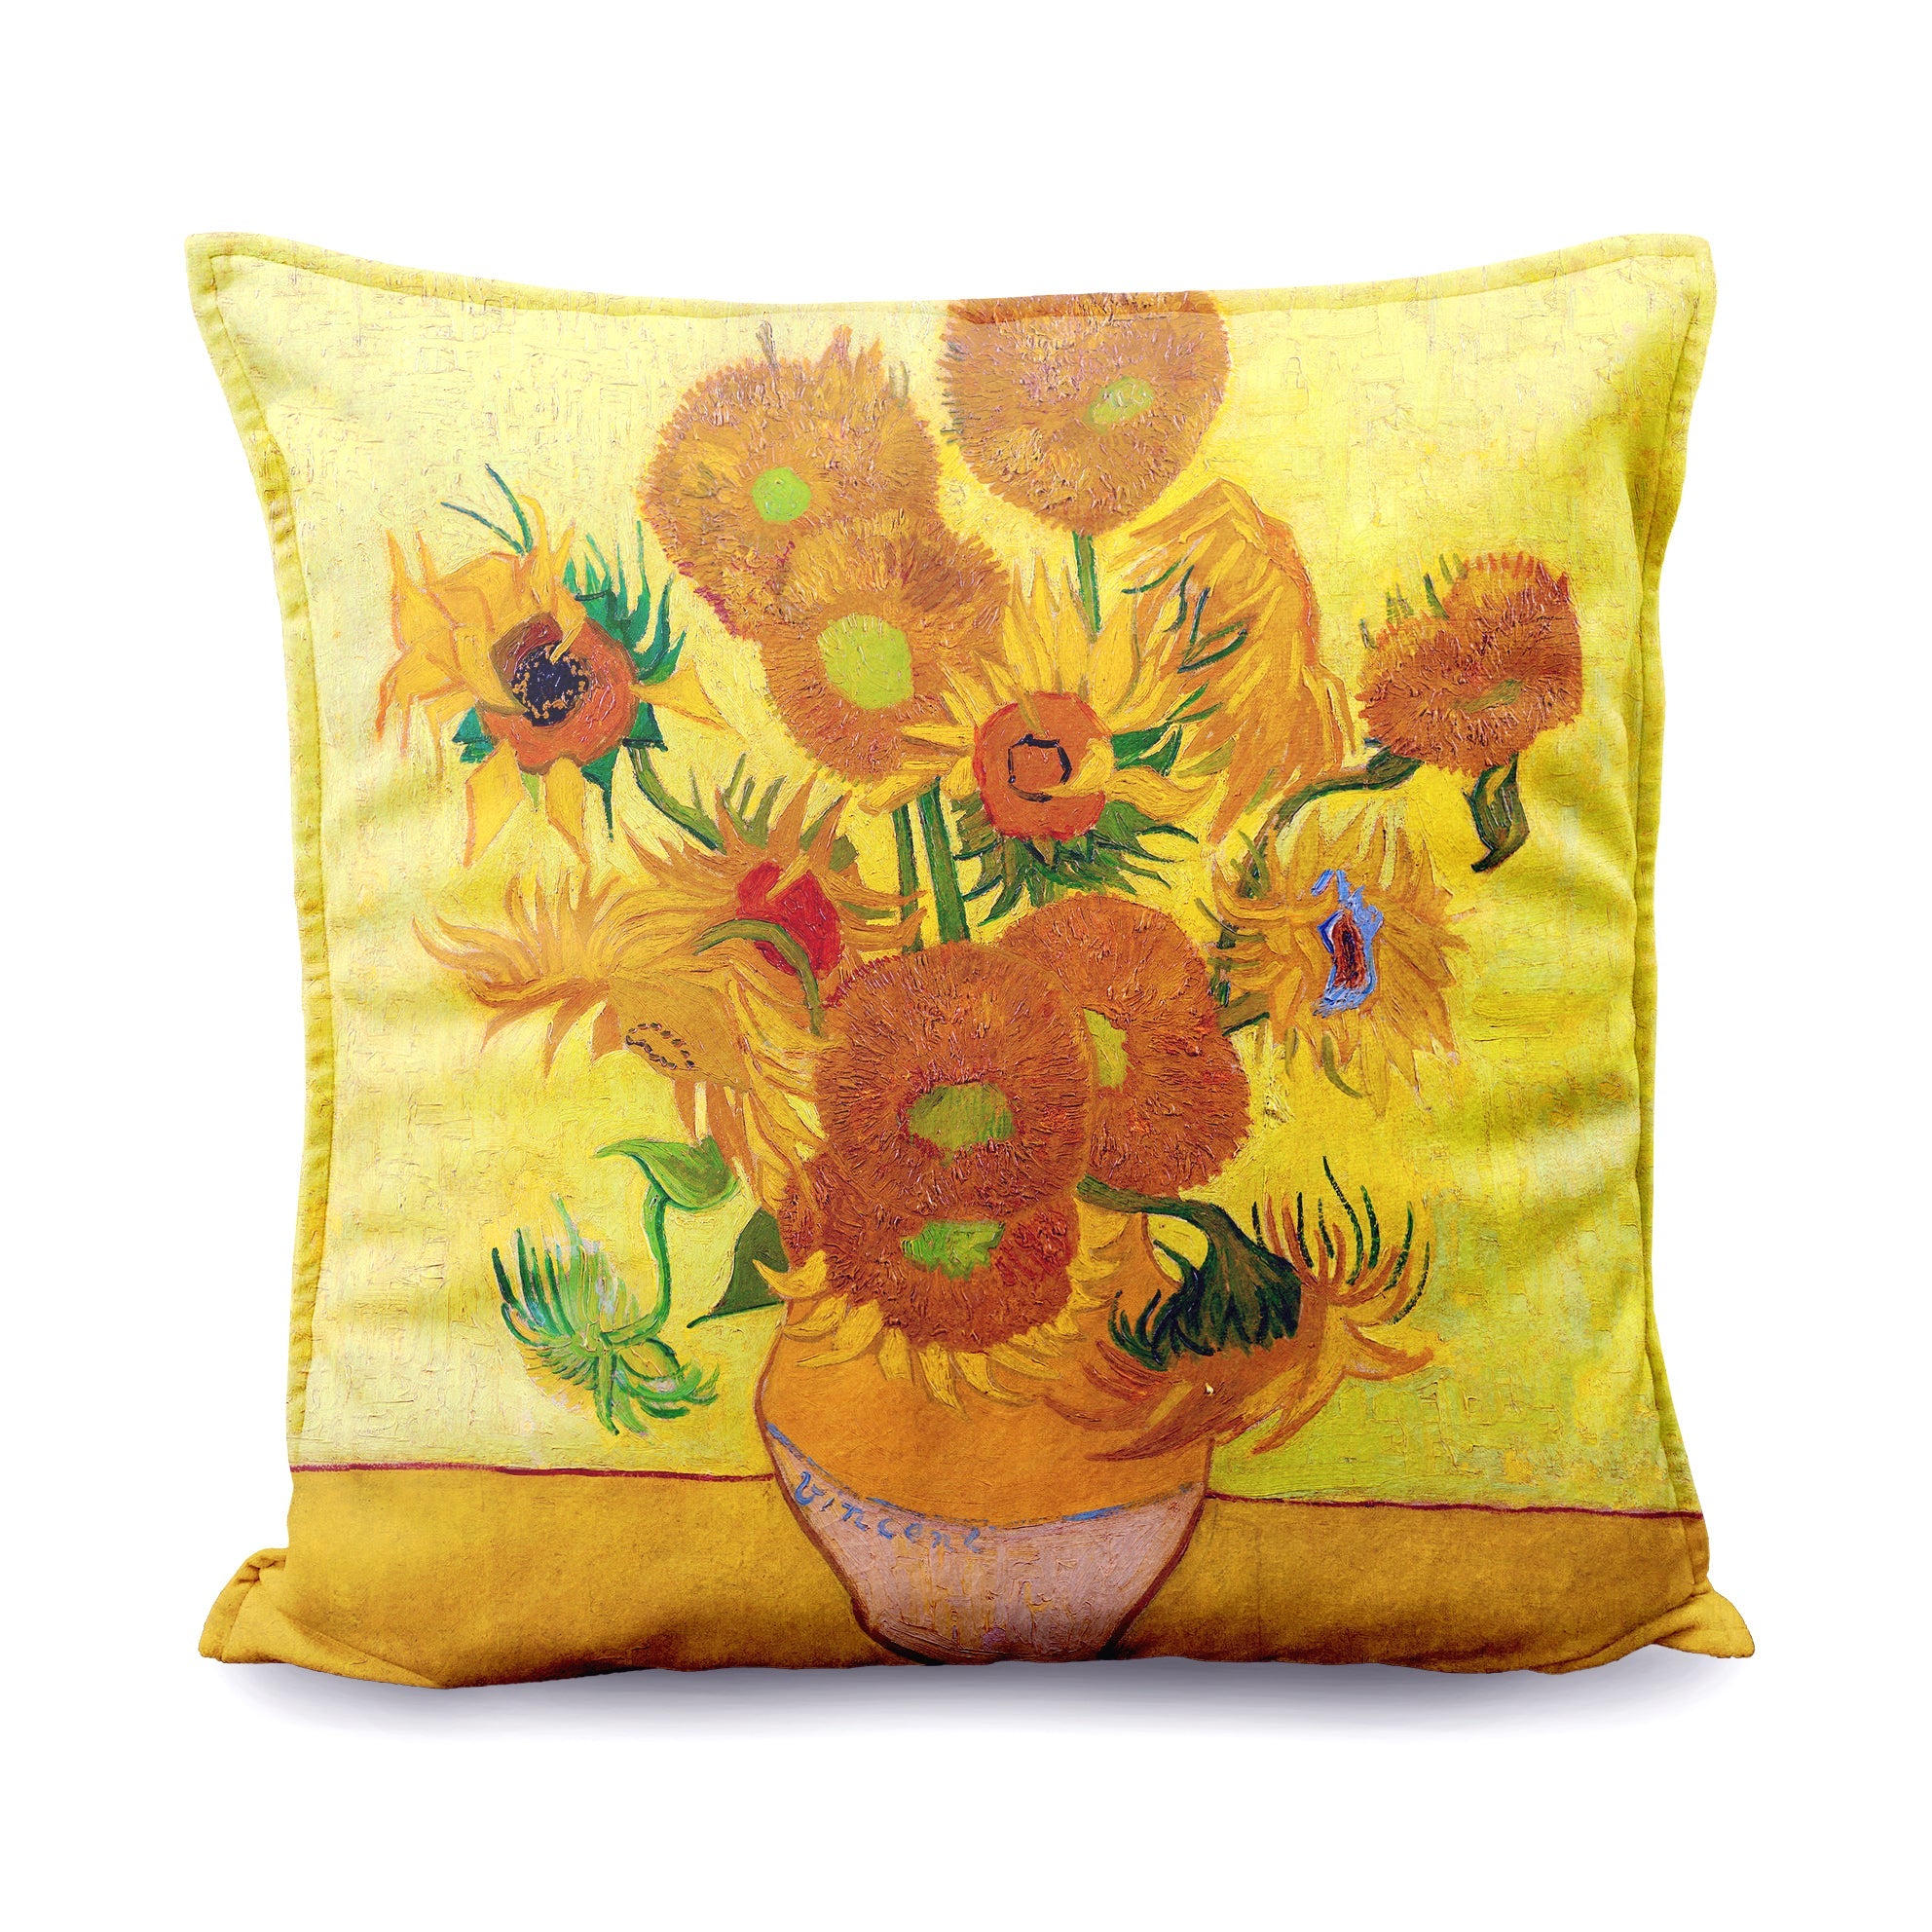 Decorative cushion Vincent van Gogh "Sunflowers"